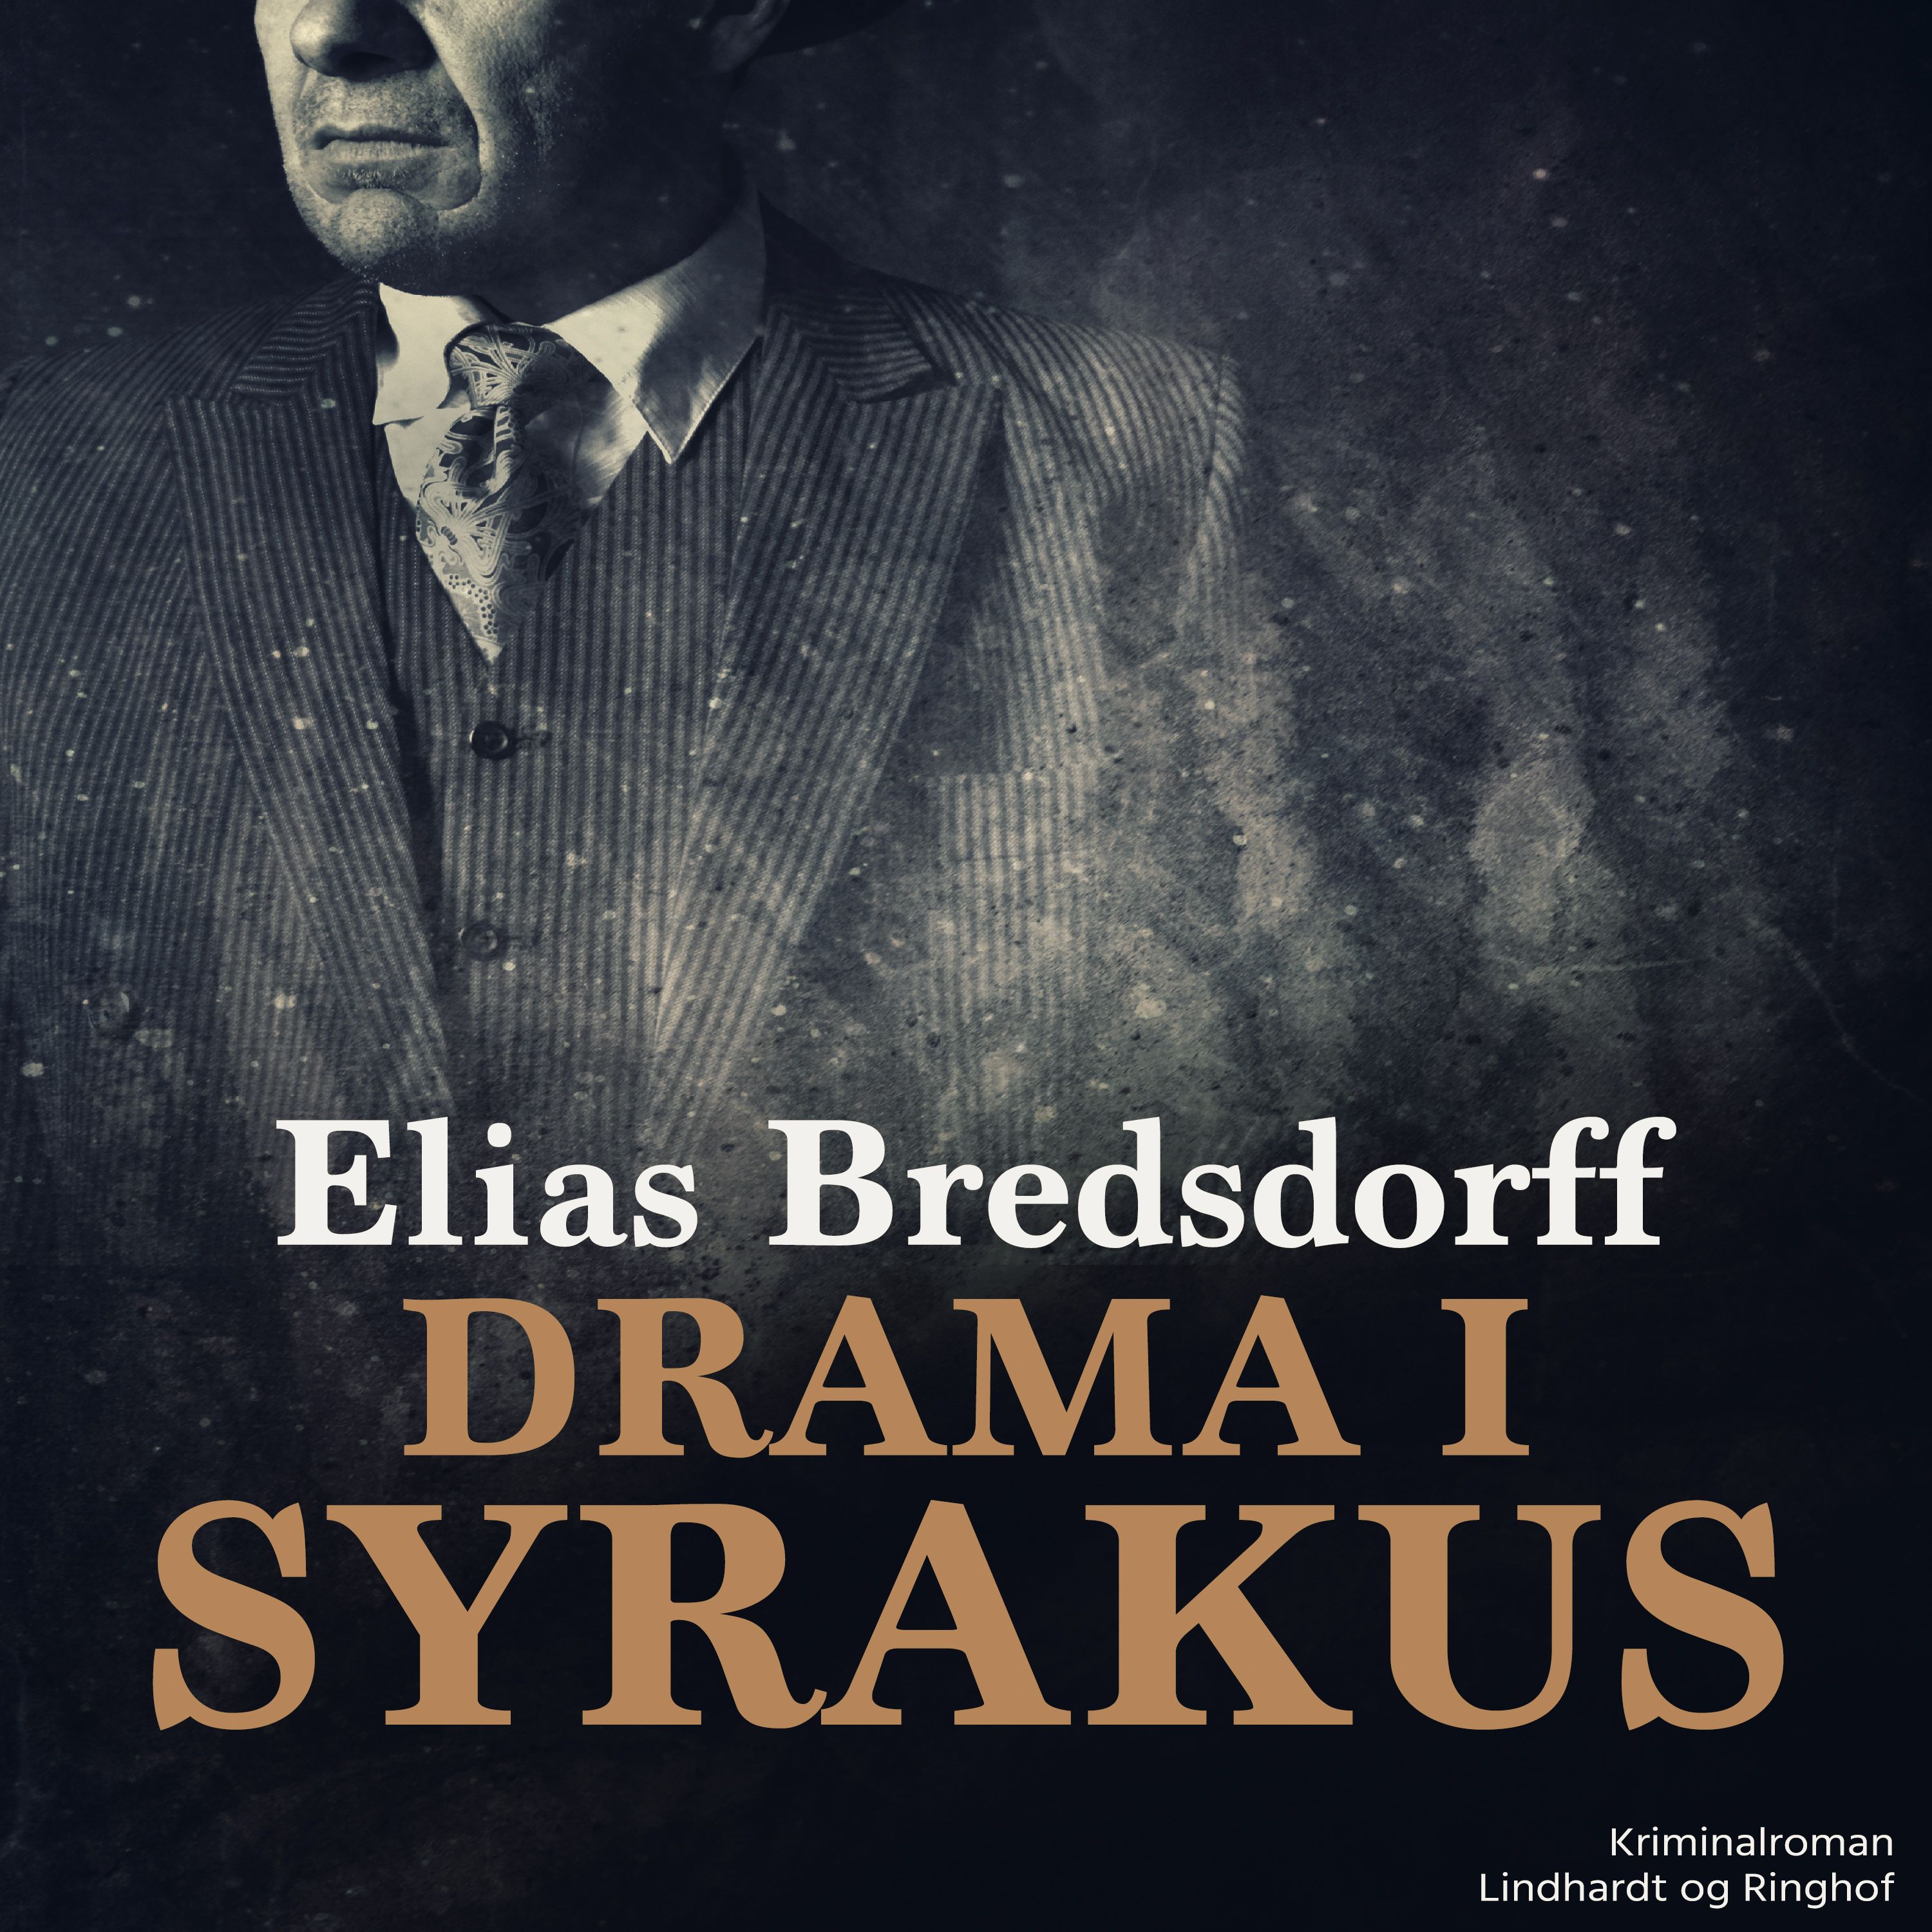 Drama i Syrakus, audiobook by Elias Bredsdorff